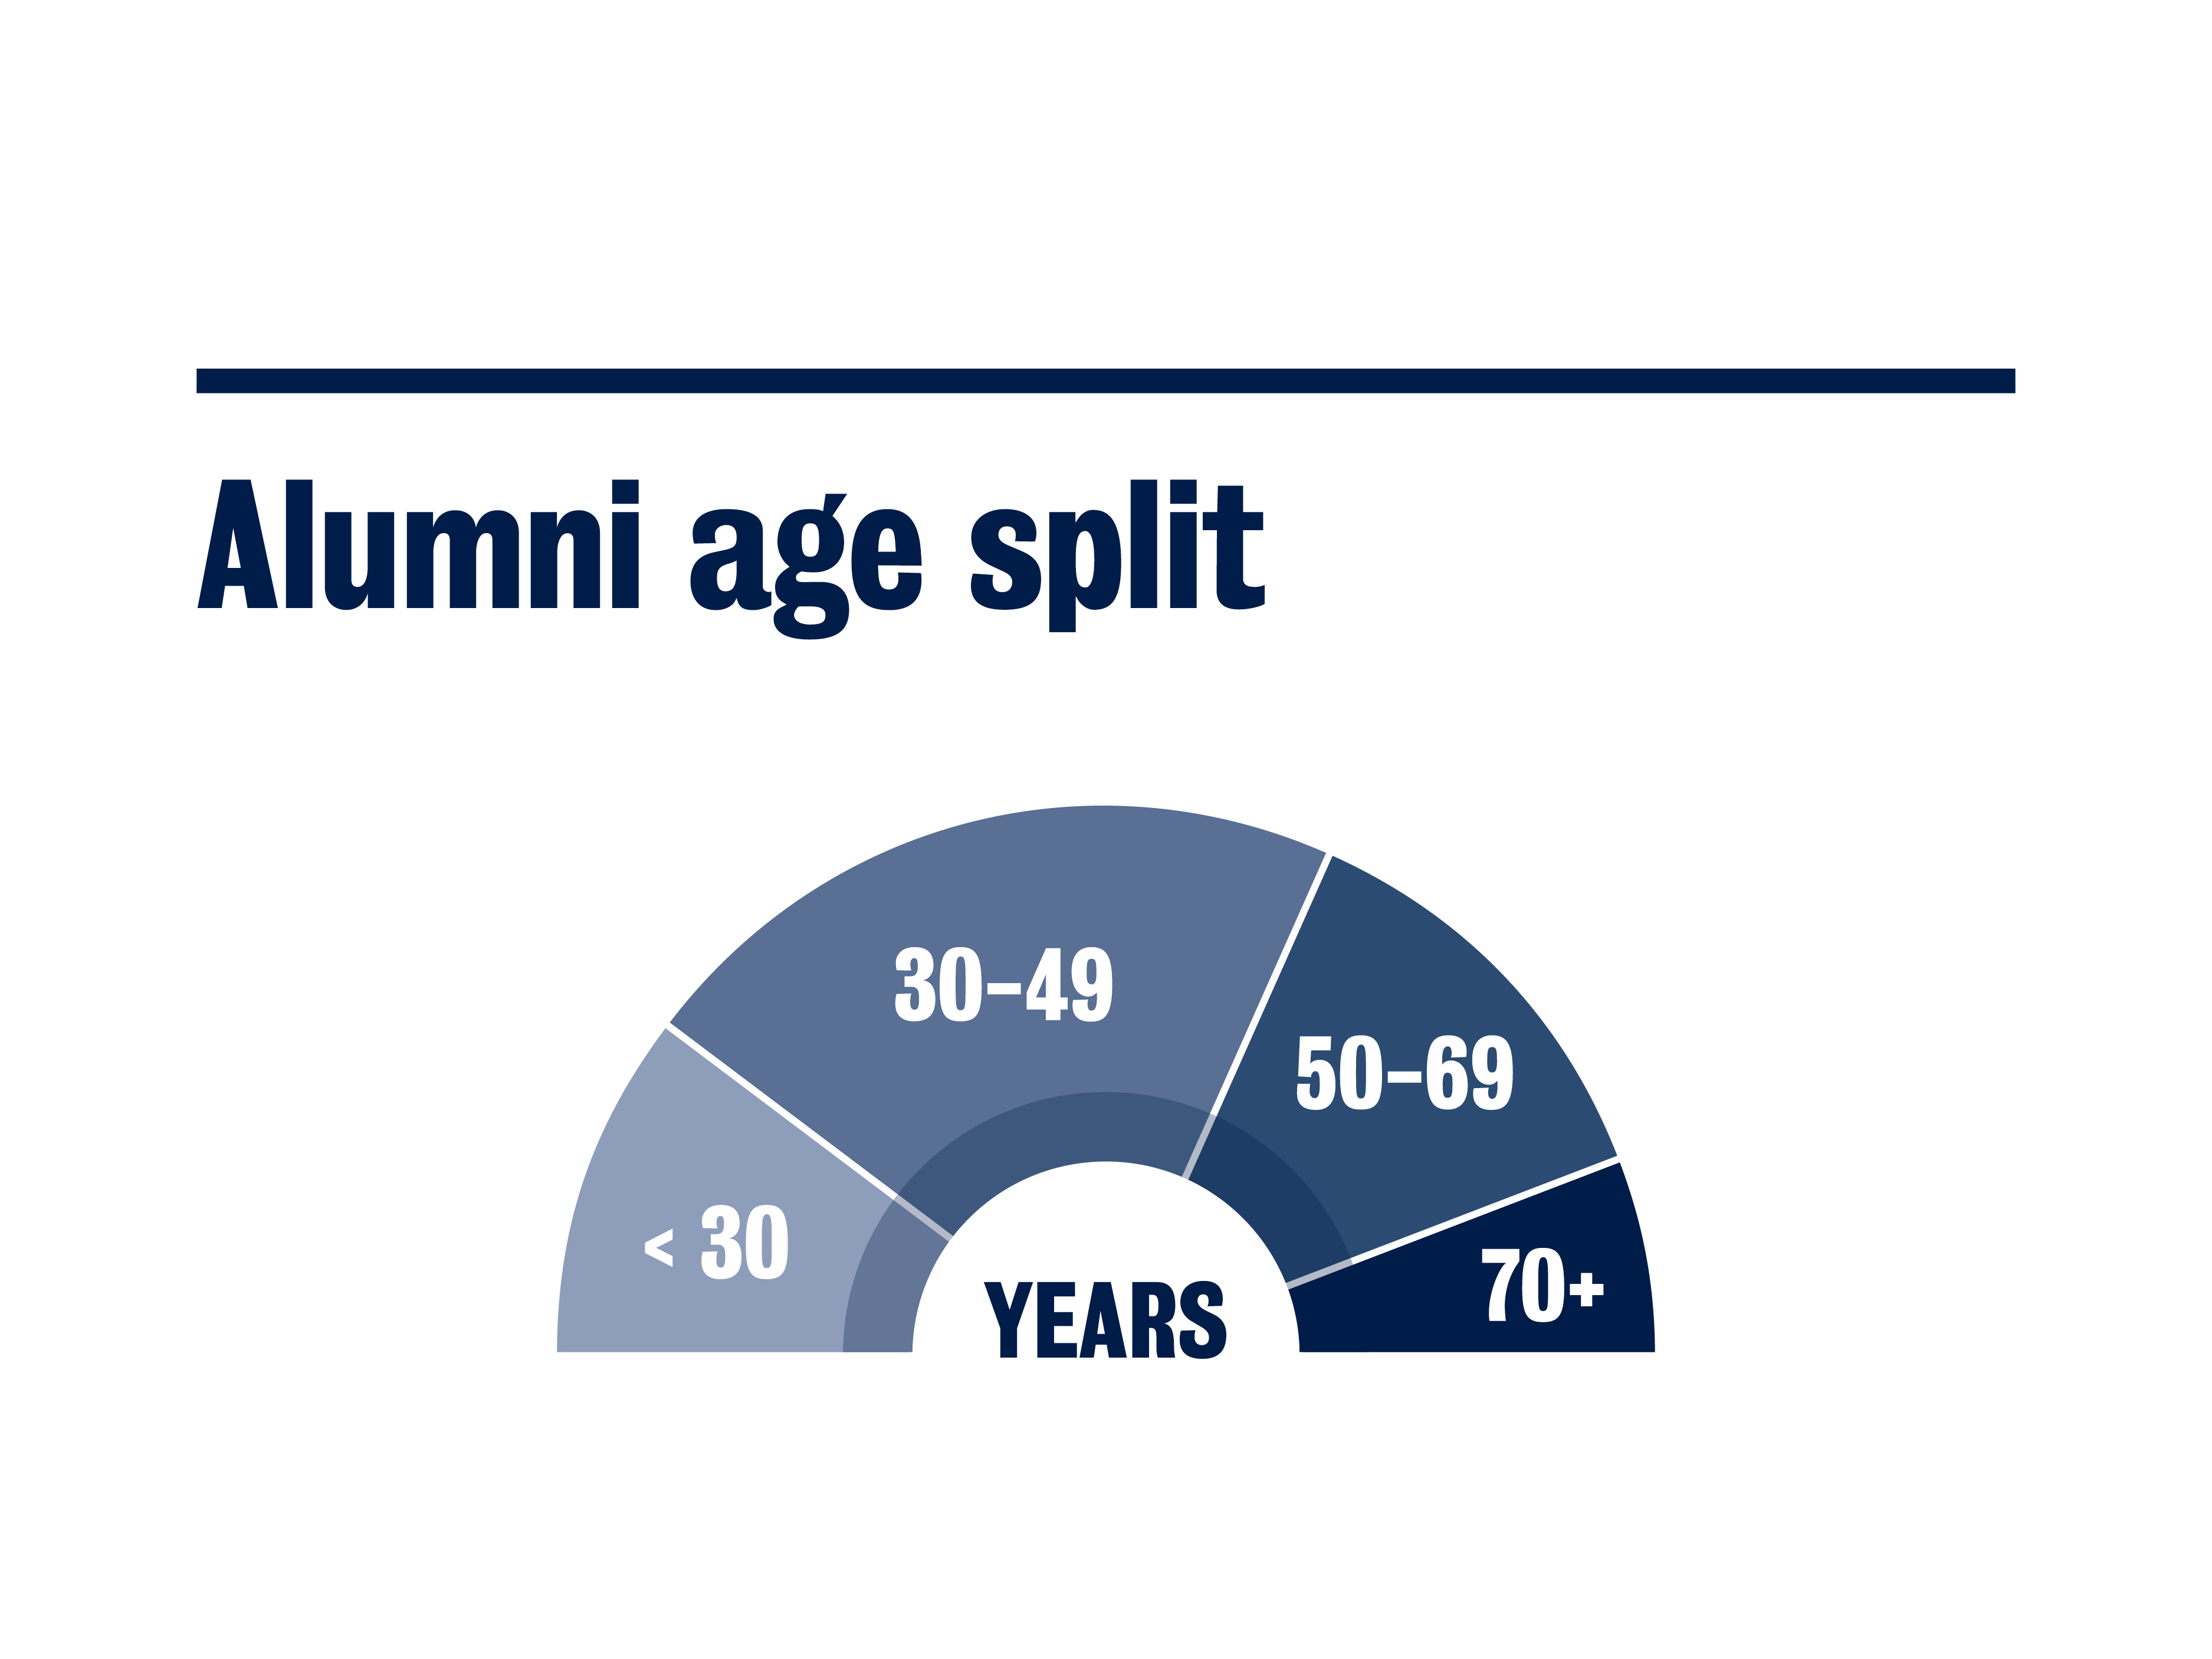 Alumni age split